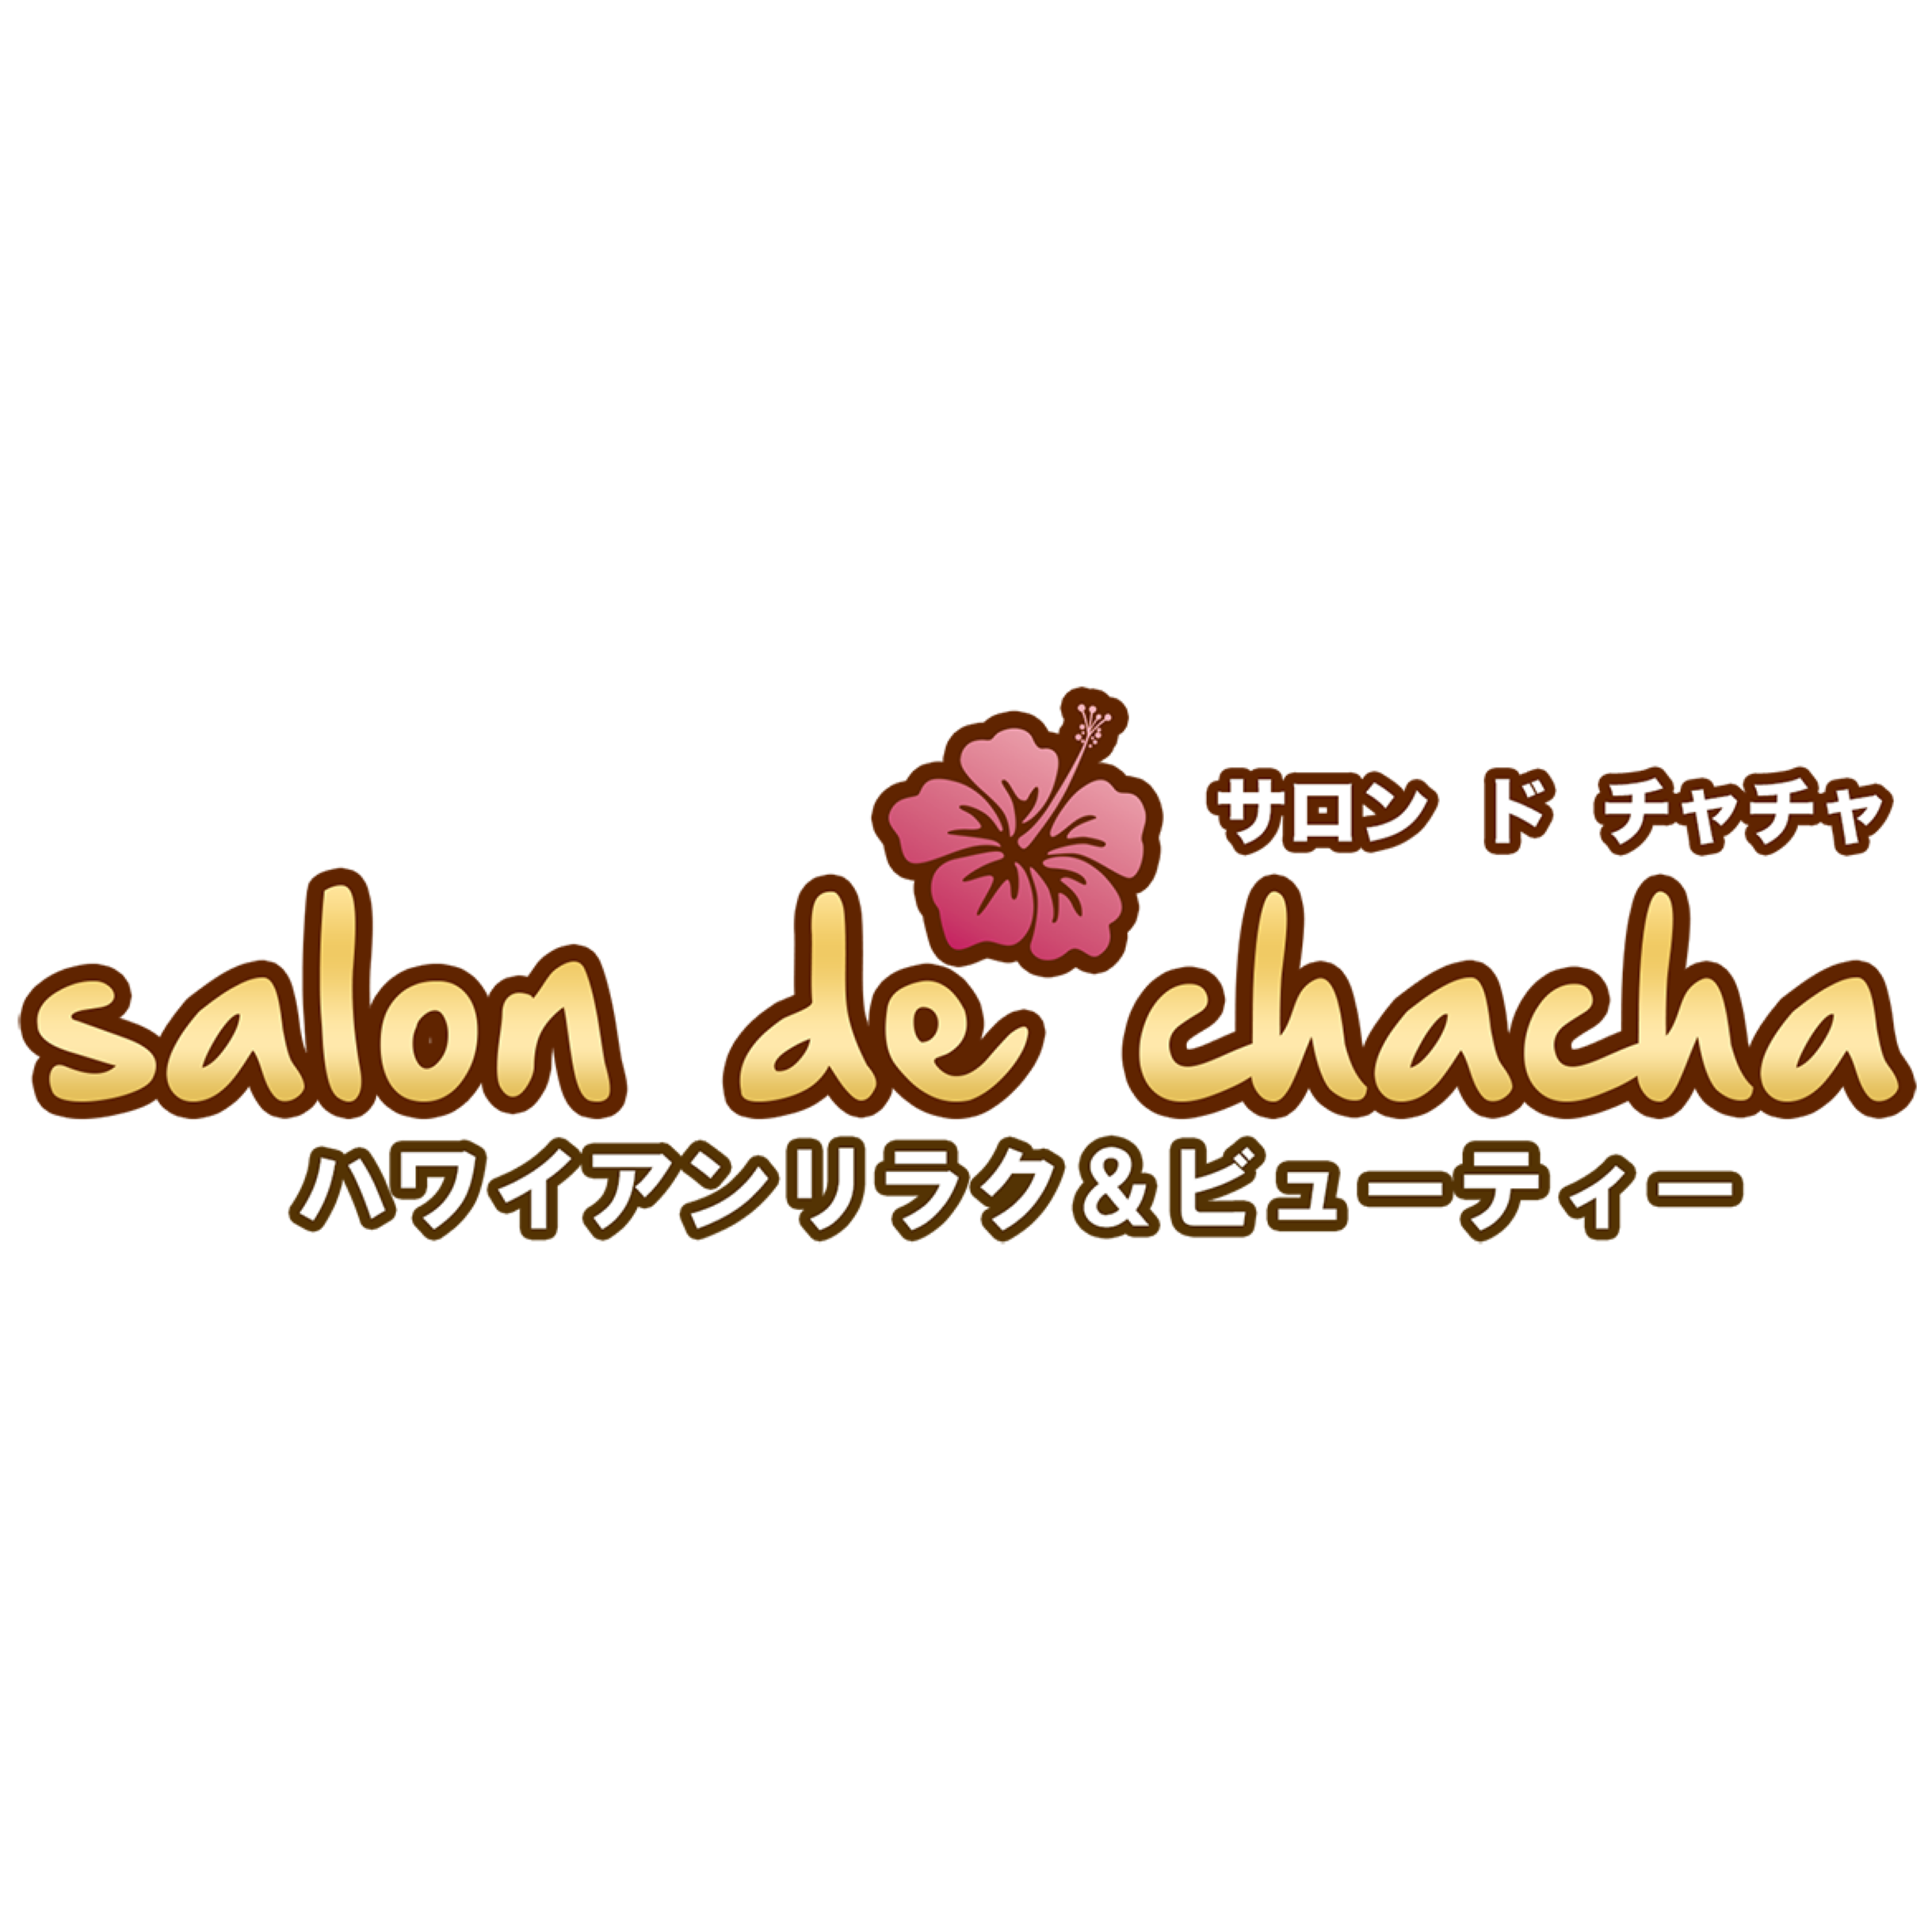 Salon de chacha 新横浜店〜ハワイアンリラク＆ビューティー〜 - Aromatherapy Service - 横浜市 - 045-534-6245 Japan | ShowMeLocal.com